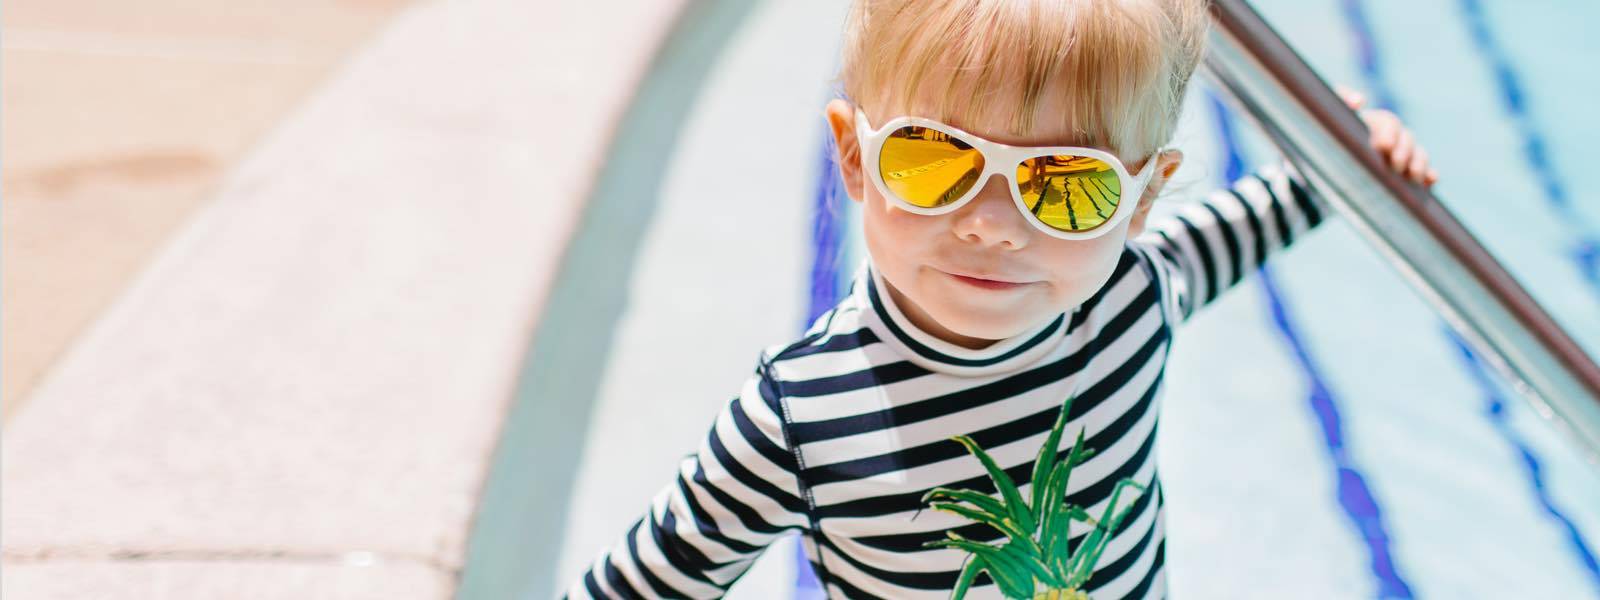 Babiators Sunglasses Sizing Guide